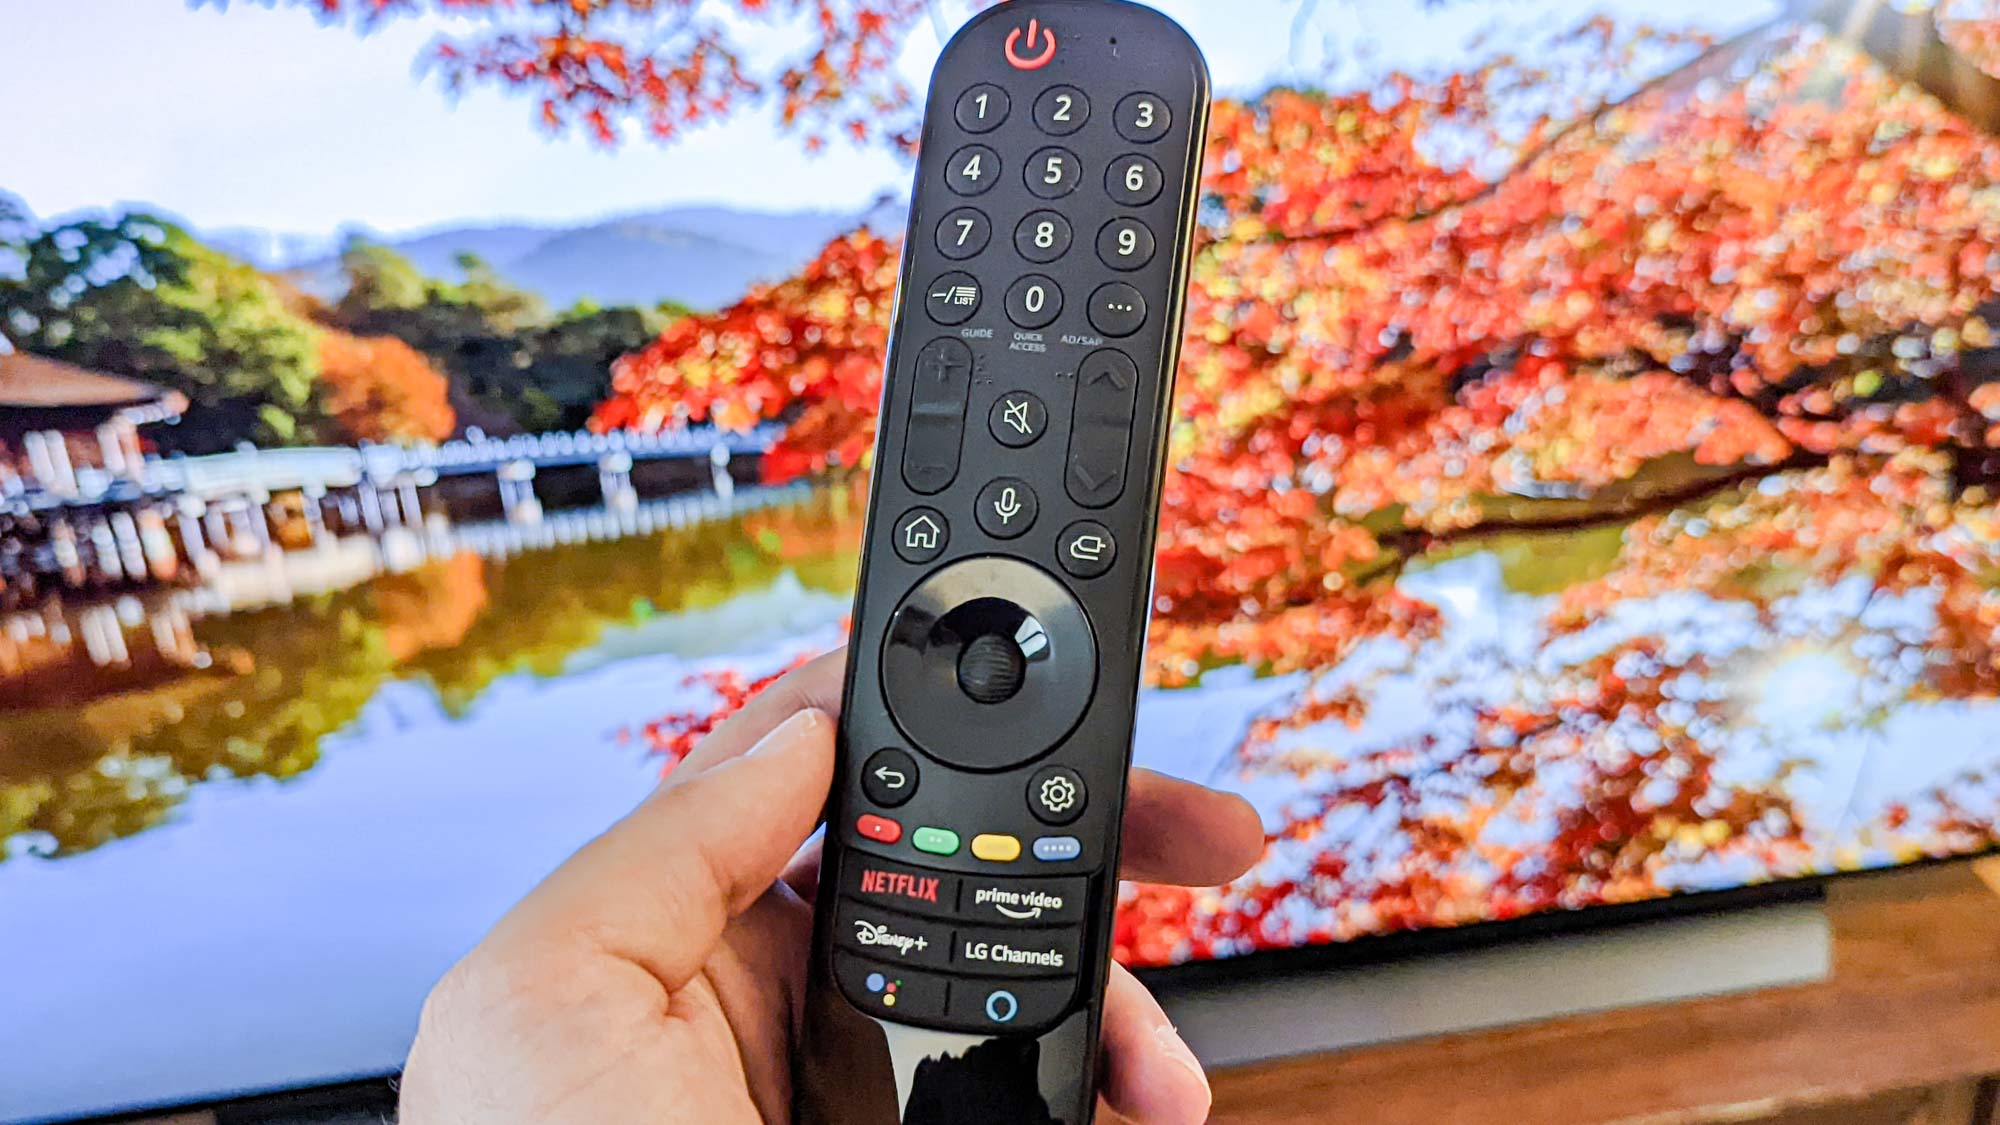 LG C1 OLED TV remote control